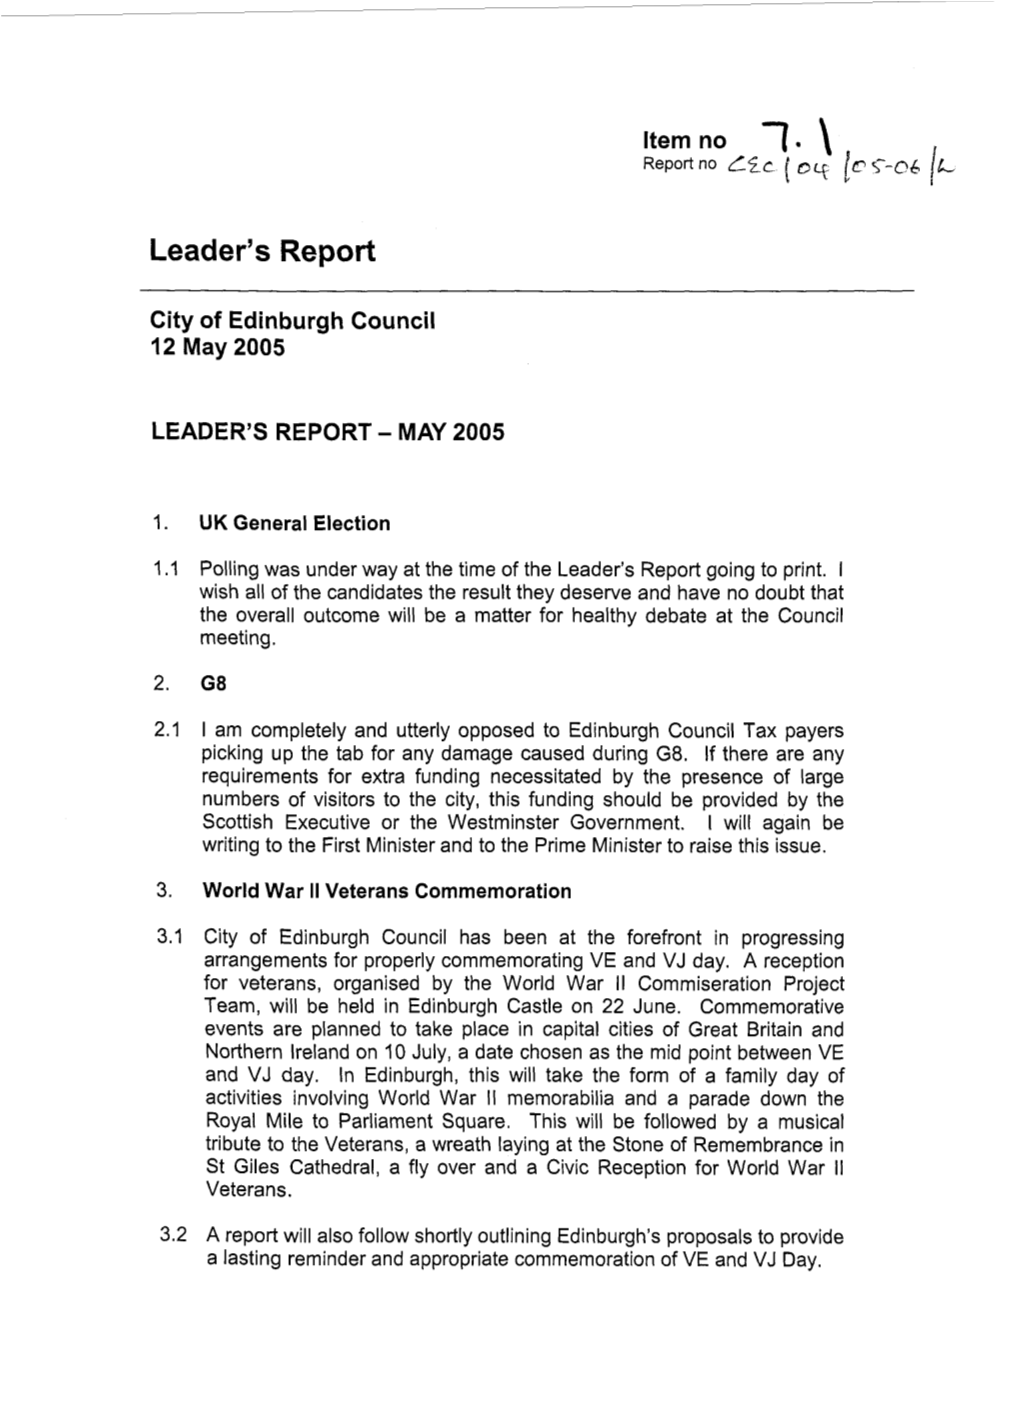 Leader's Report